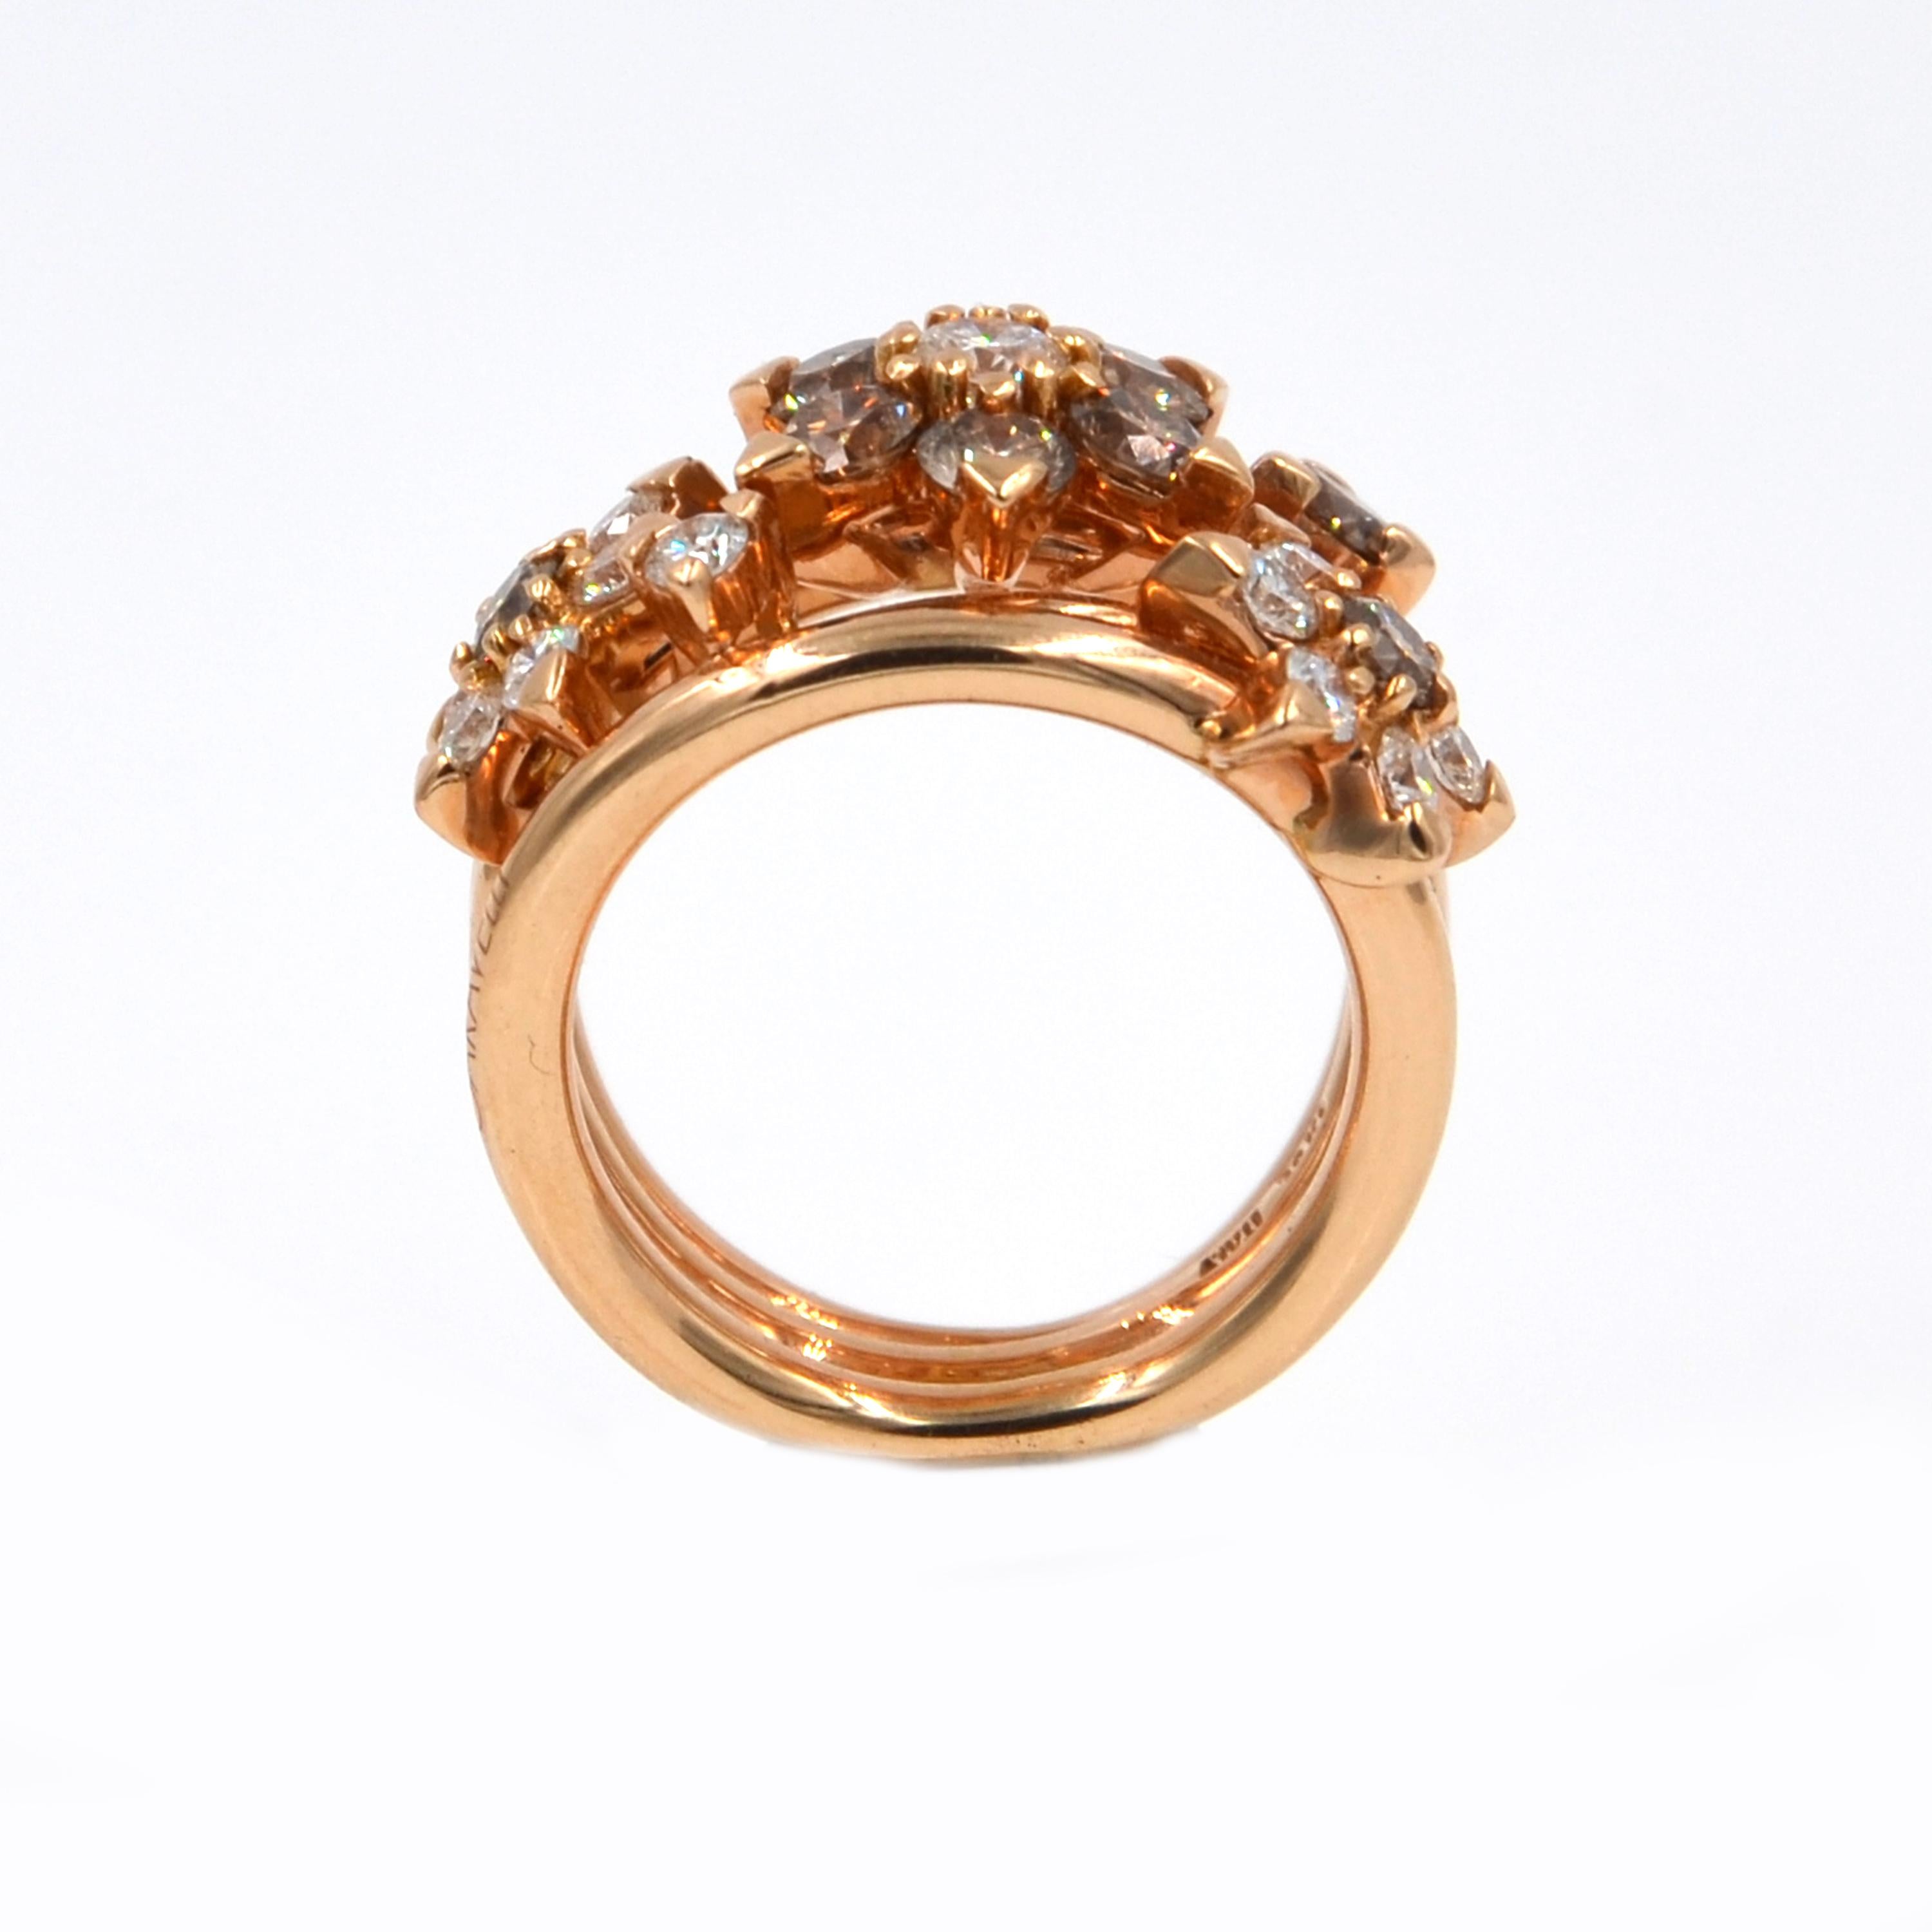 Contemporary 18 Karat Rose Gold White and Brown Diamonds Garavelli Flower Cocktail Ring